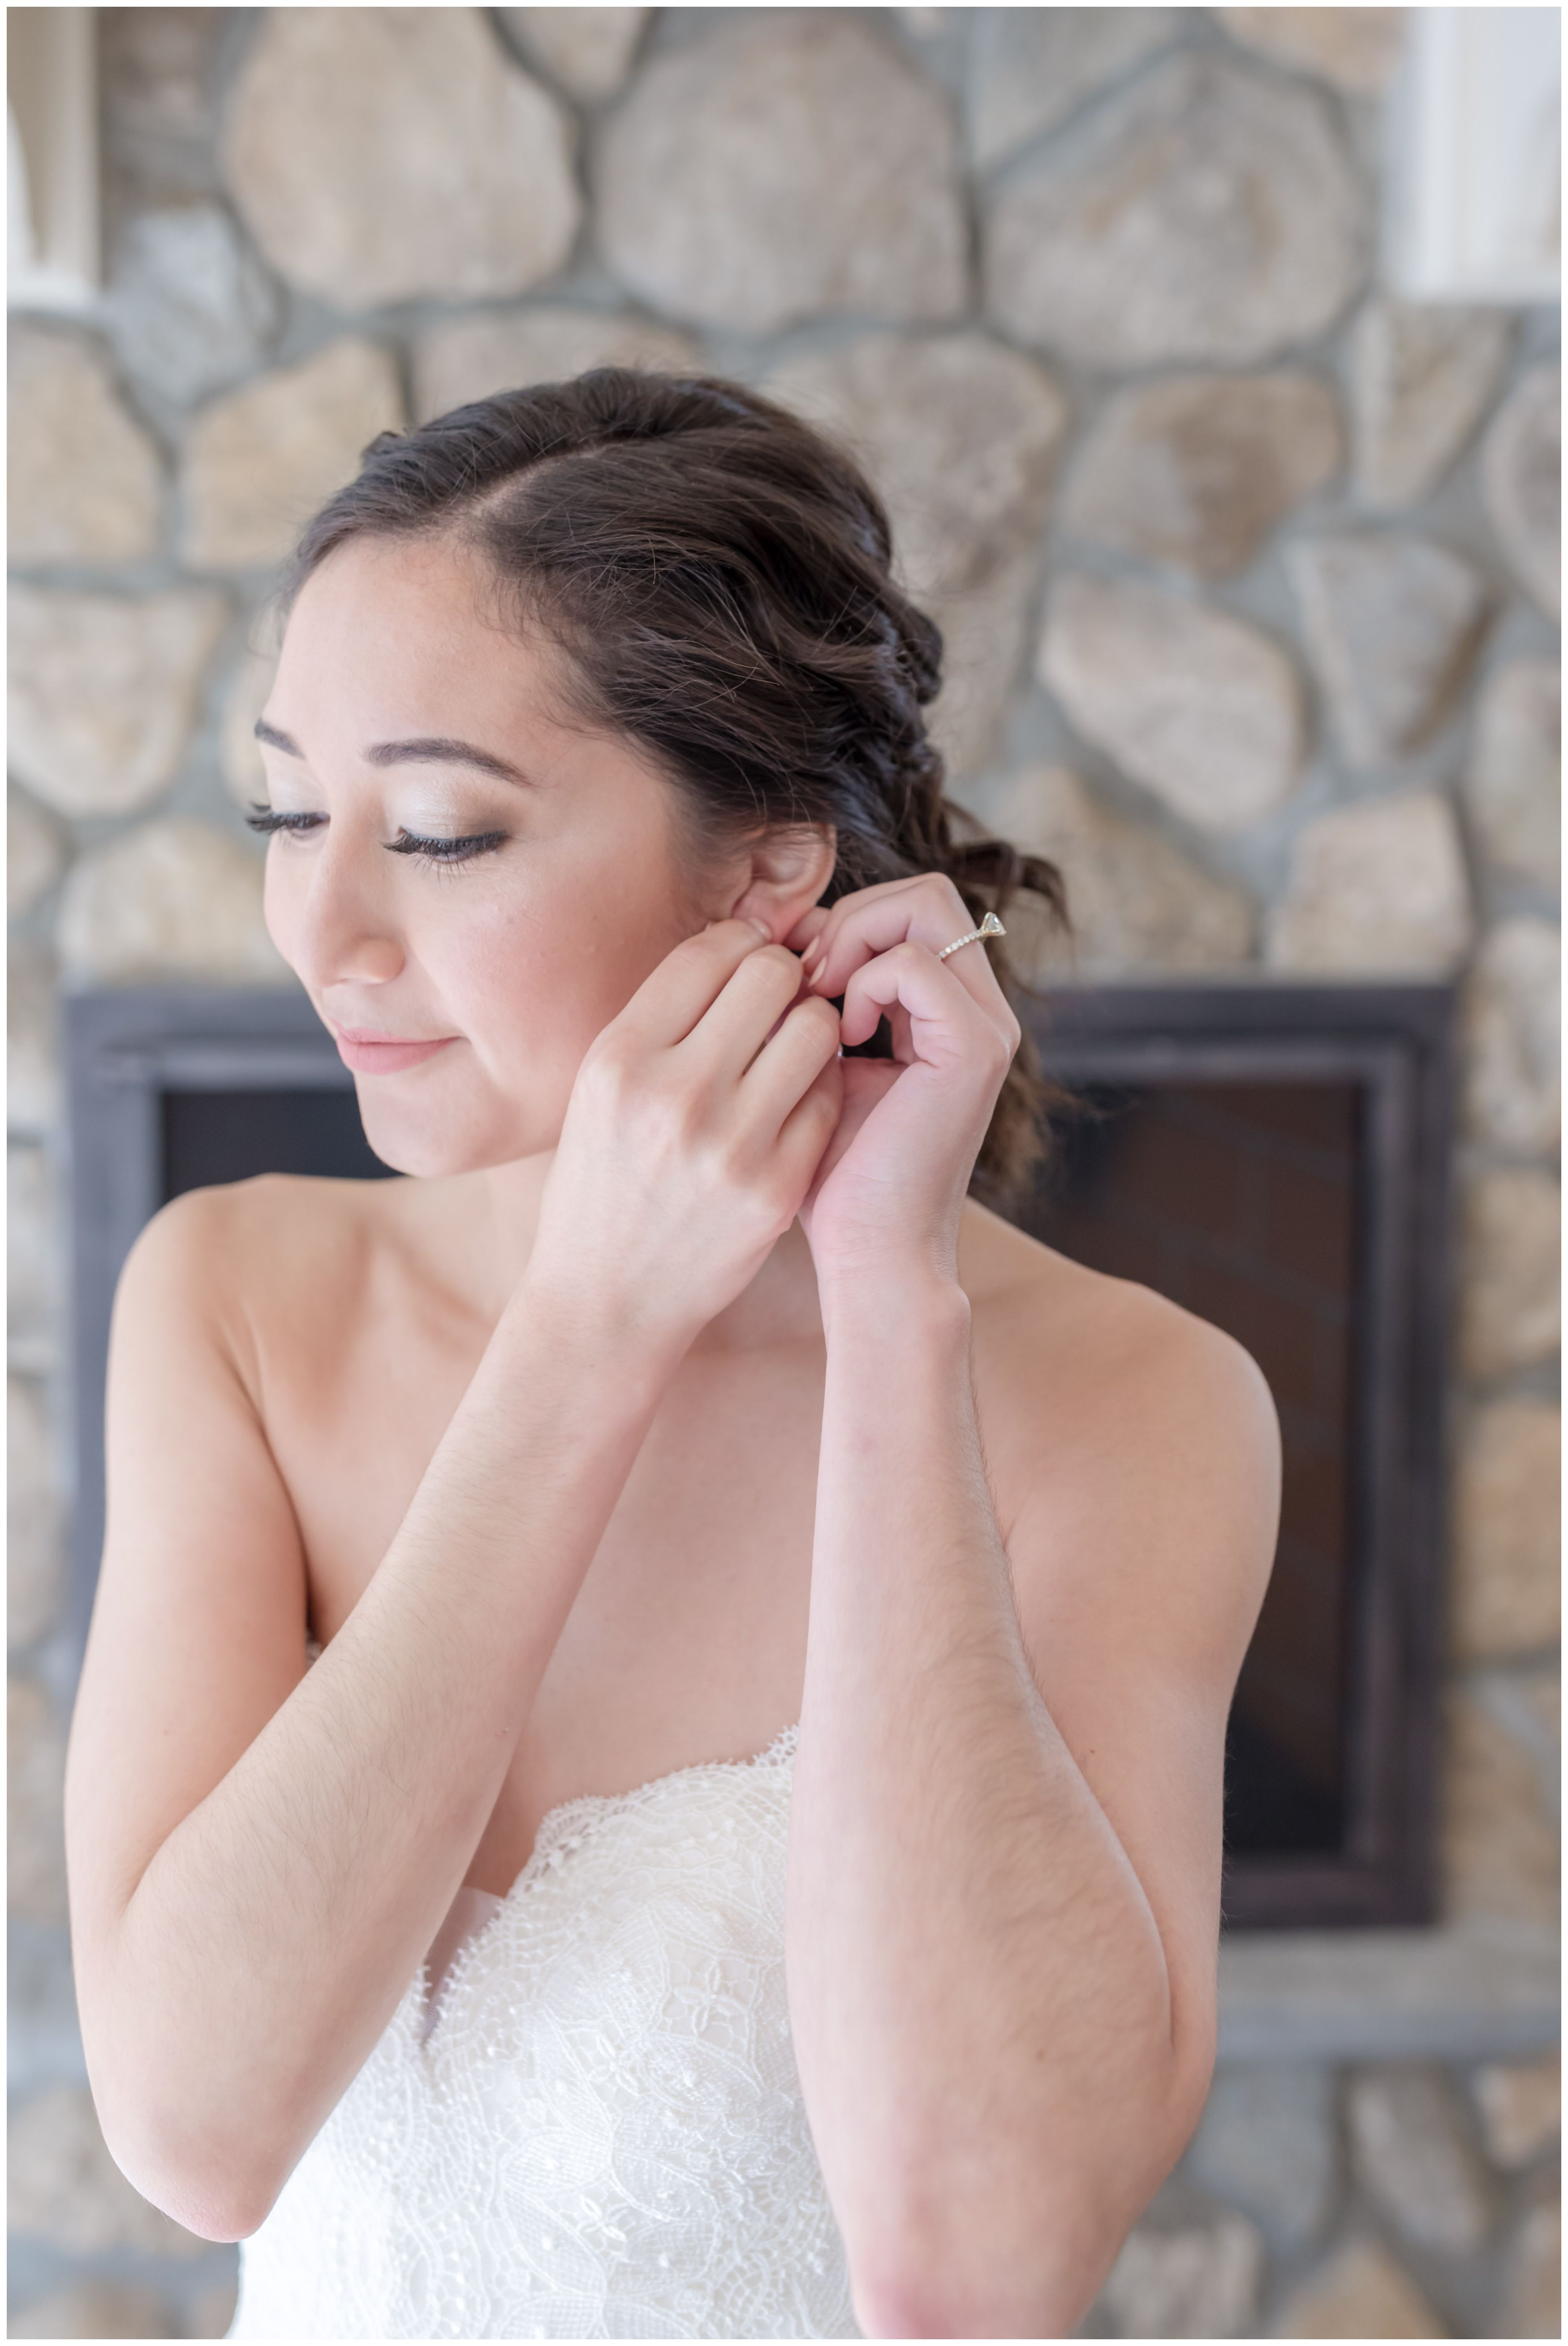 Bride getting ready earring on detail